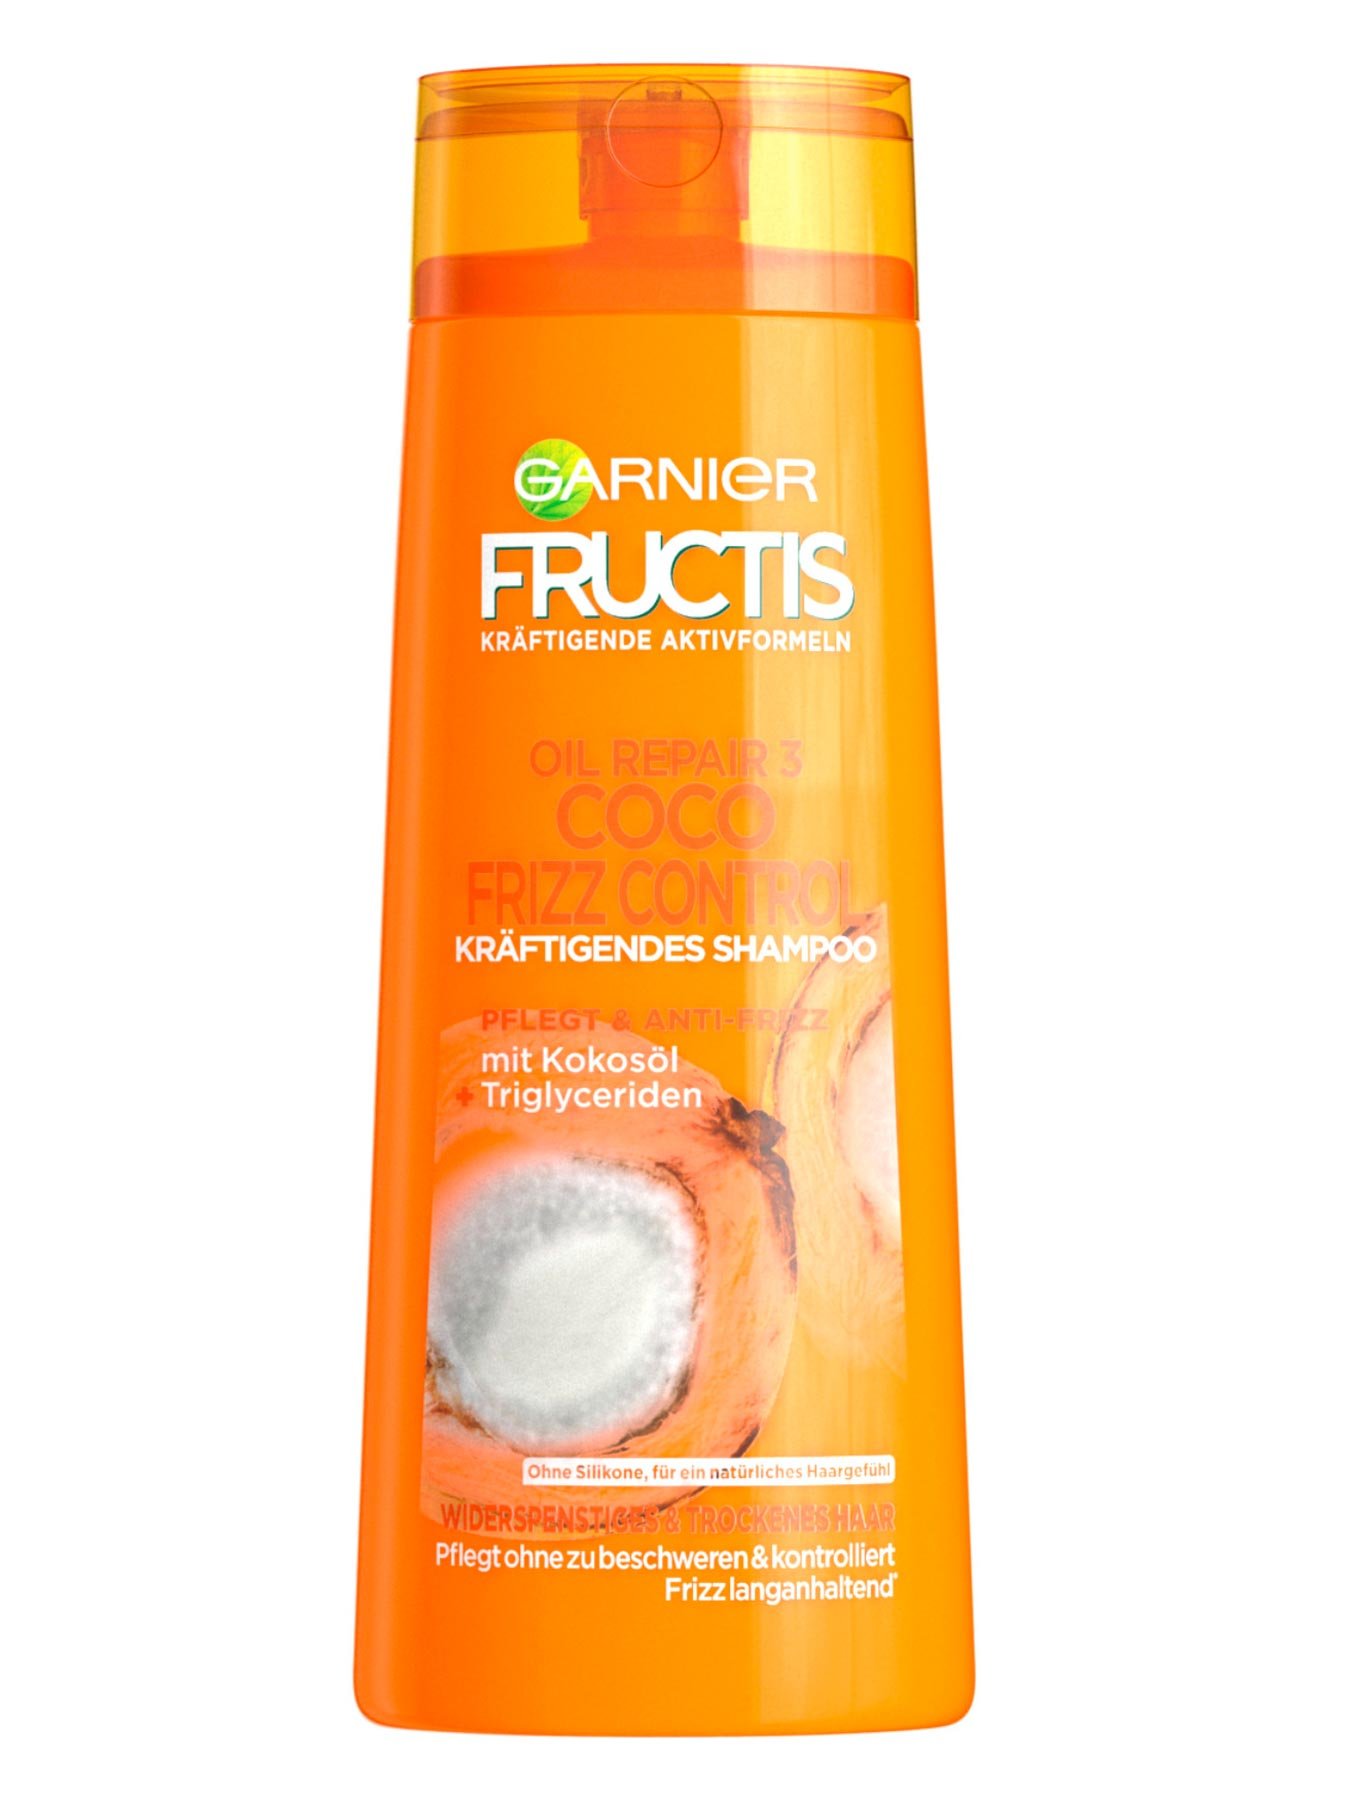 Oil Repair 3 Coco Frizz Control Kraftigendes Shampoo Fur Langanhaltende Anti Frizz Kontrolle Garnier